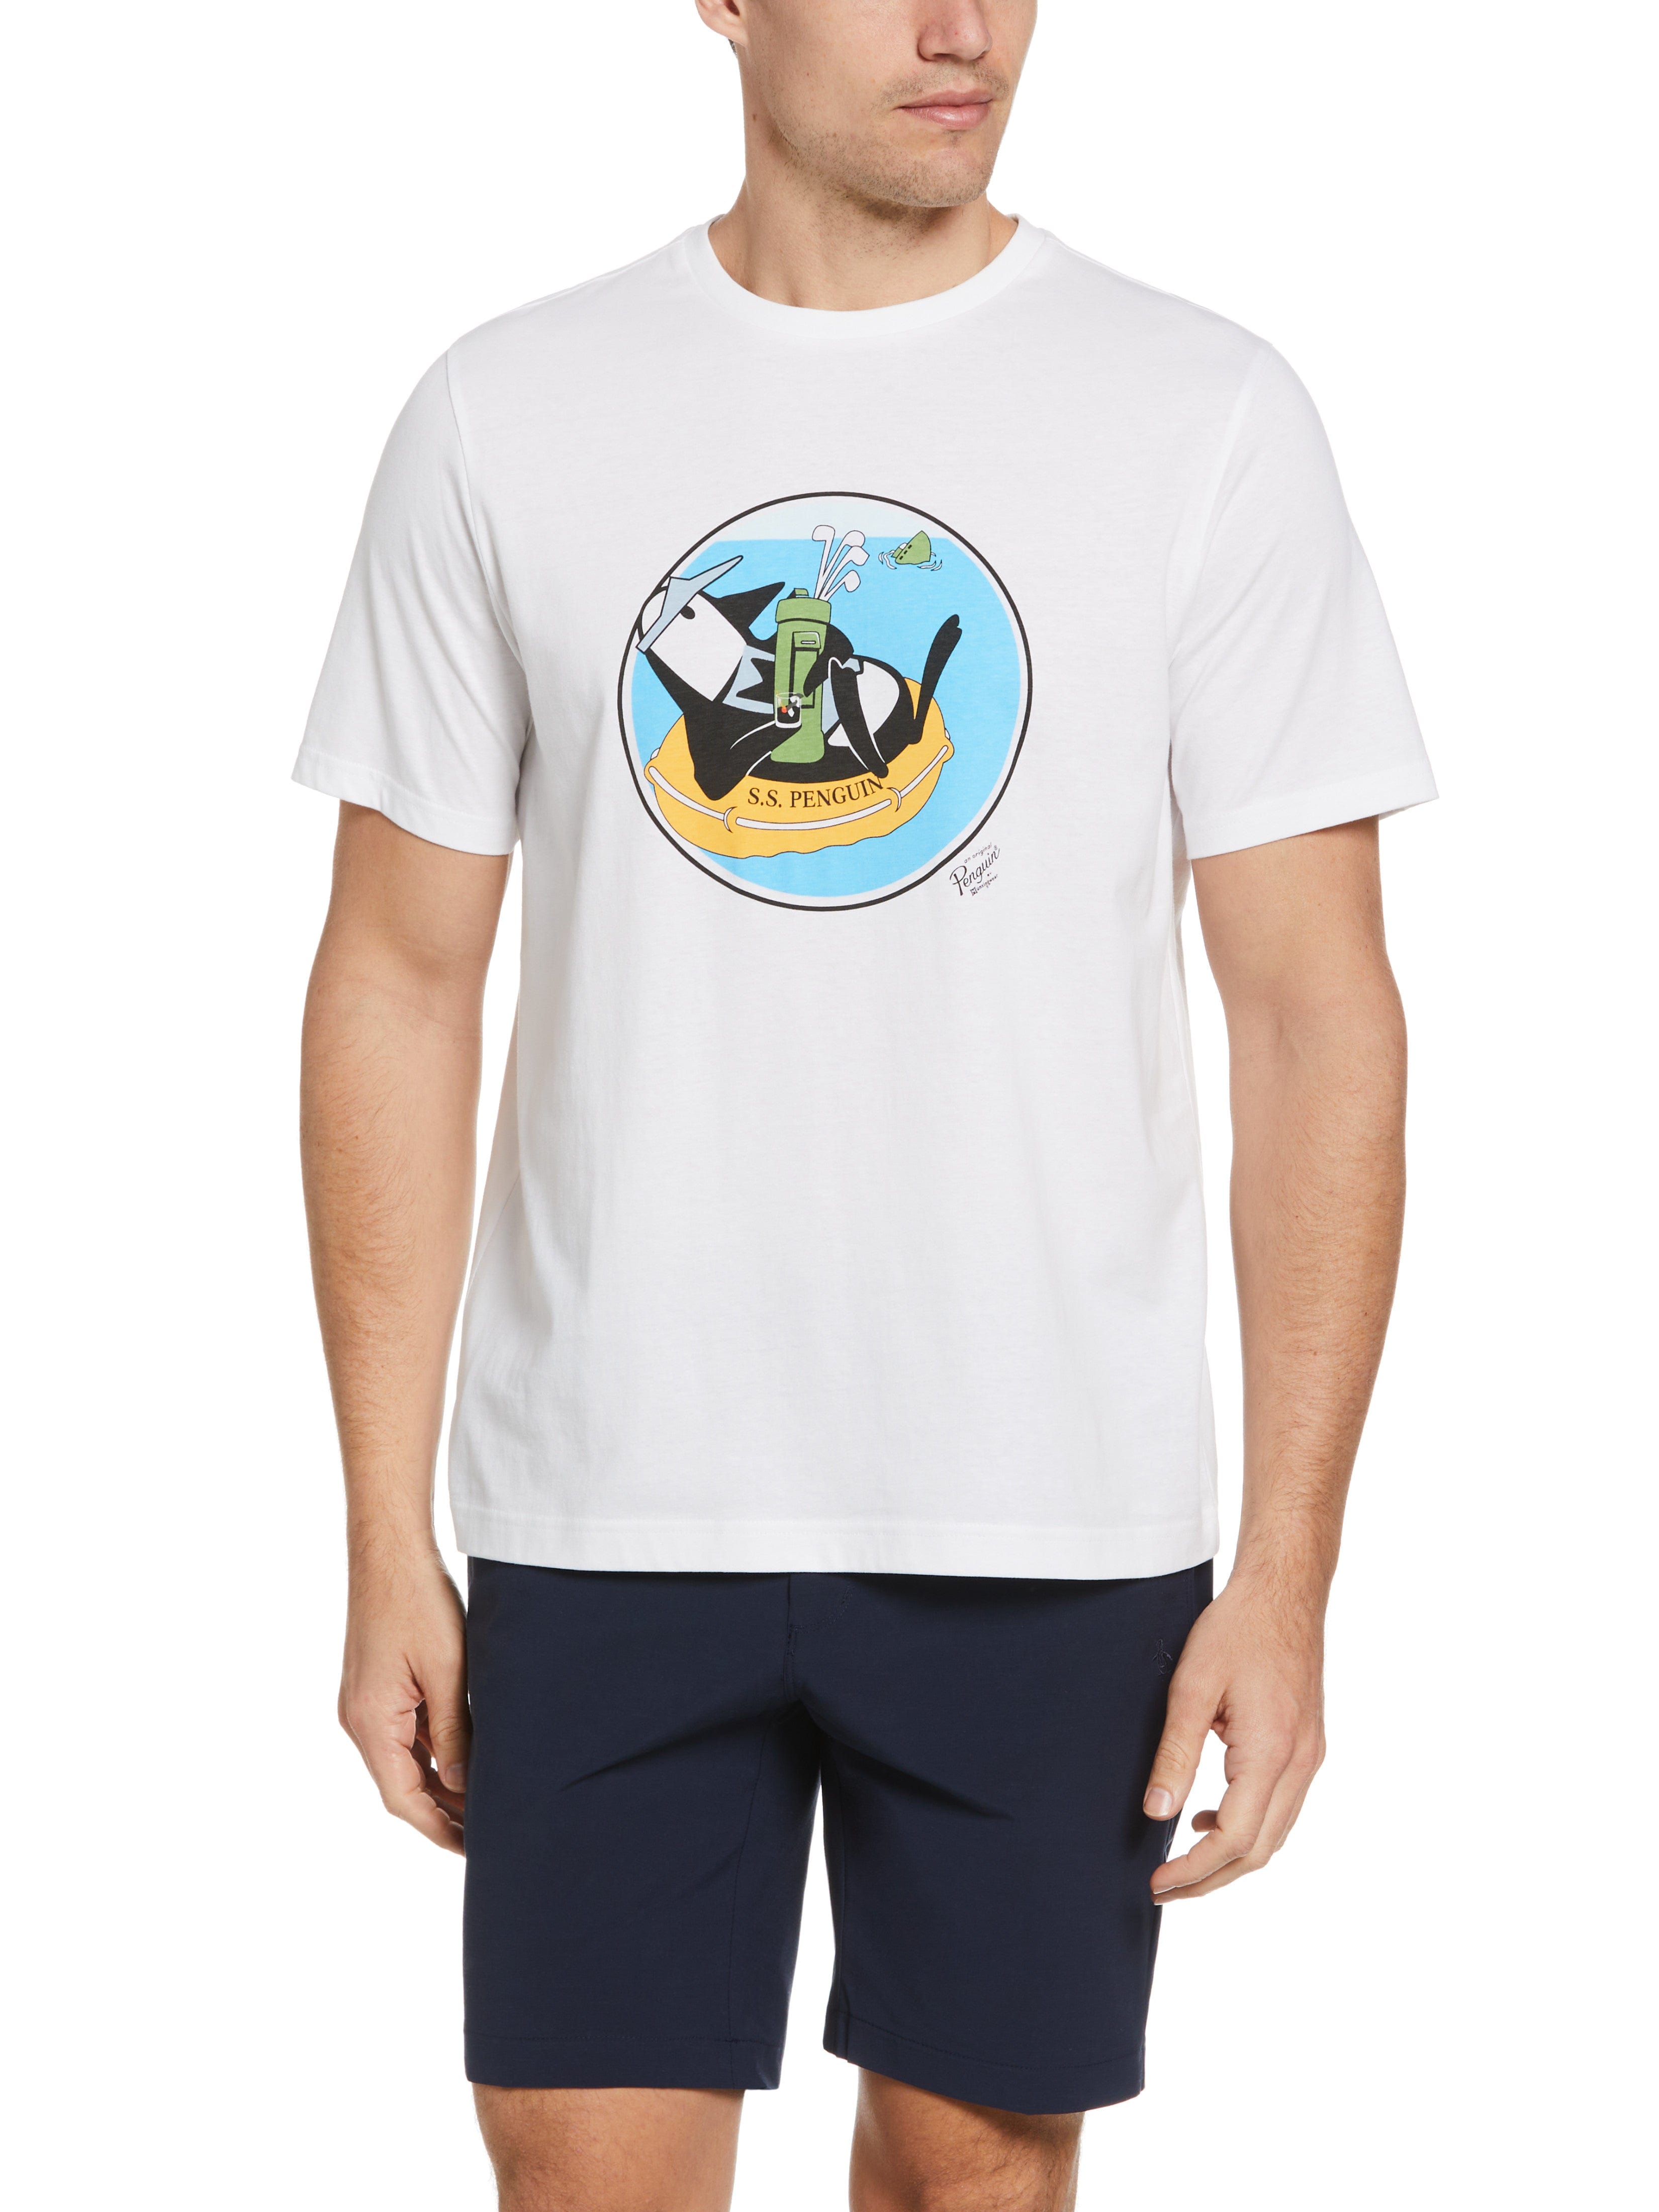 Original Penguin Mens Shipwreck Pete Graphic Golf T-Shirt, Size Small, White, 100% Cotton | Golf Apparel Shop